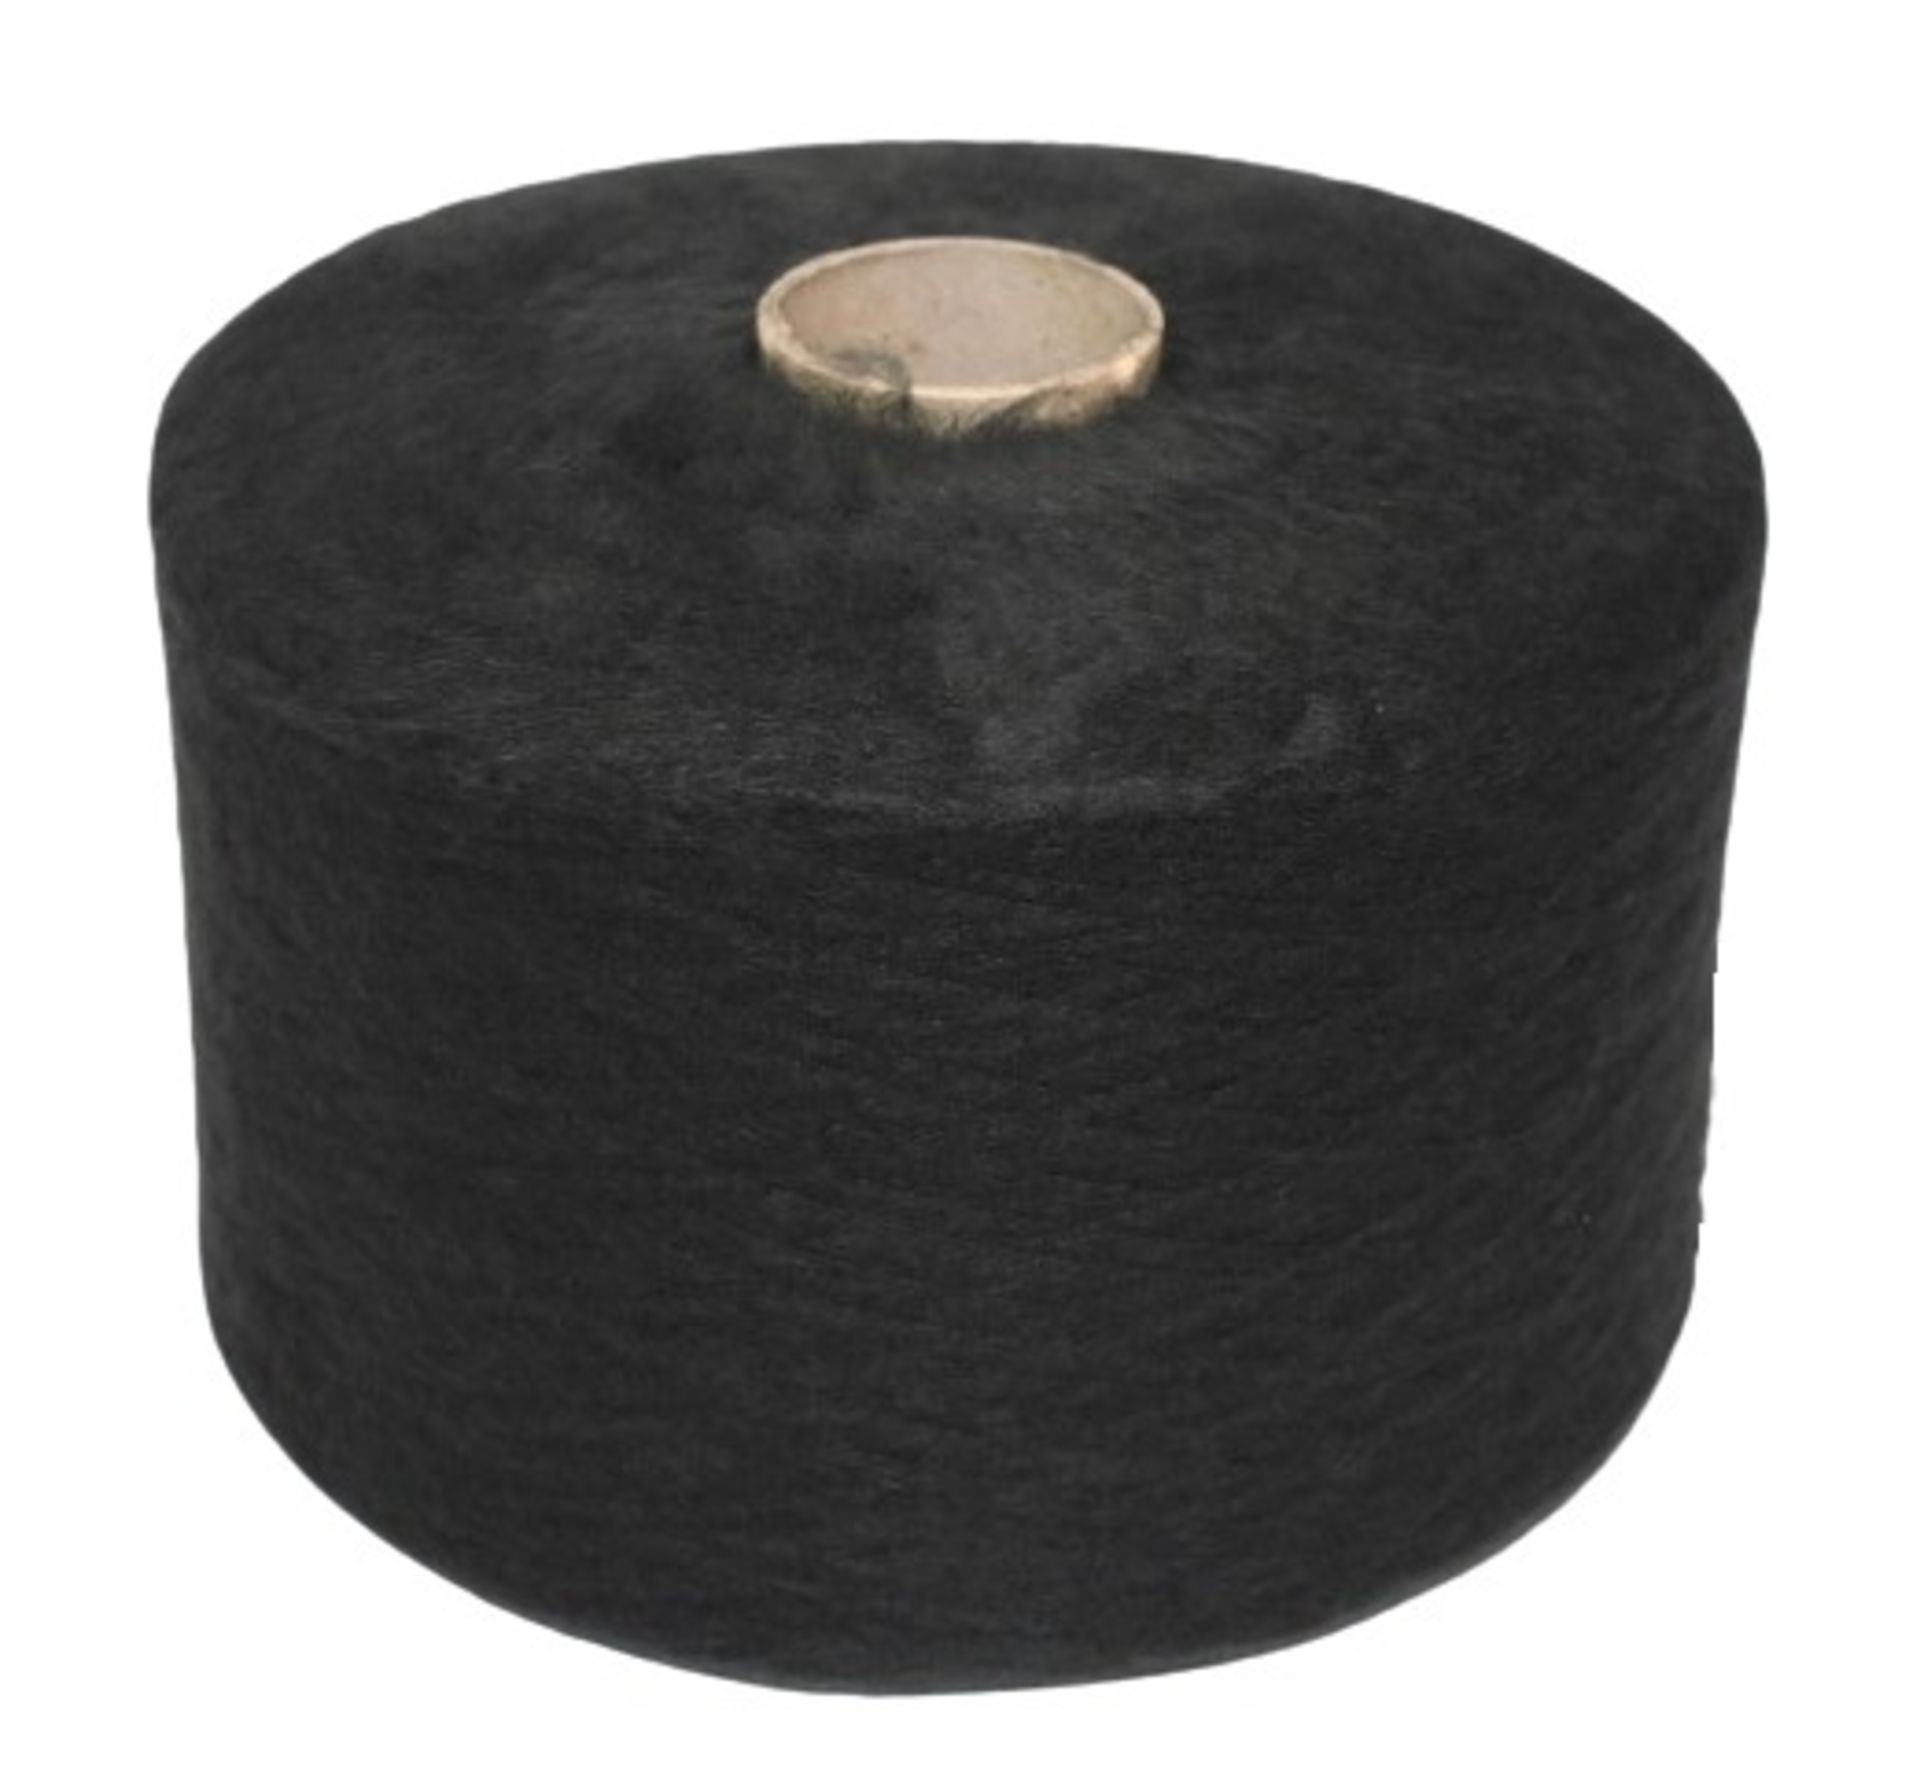 12 x Cones of 1/7,5 Lagona Knitting Yarn - Charcoal - Approx Weight: 2,300g - New Stock ABL Yarn